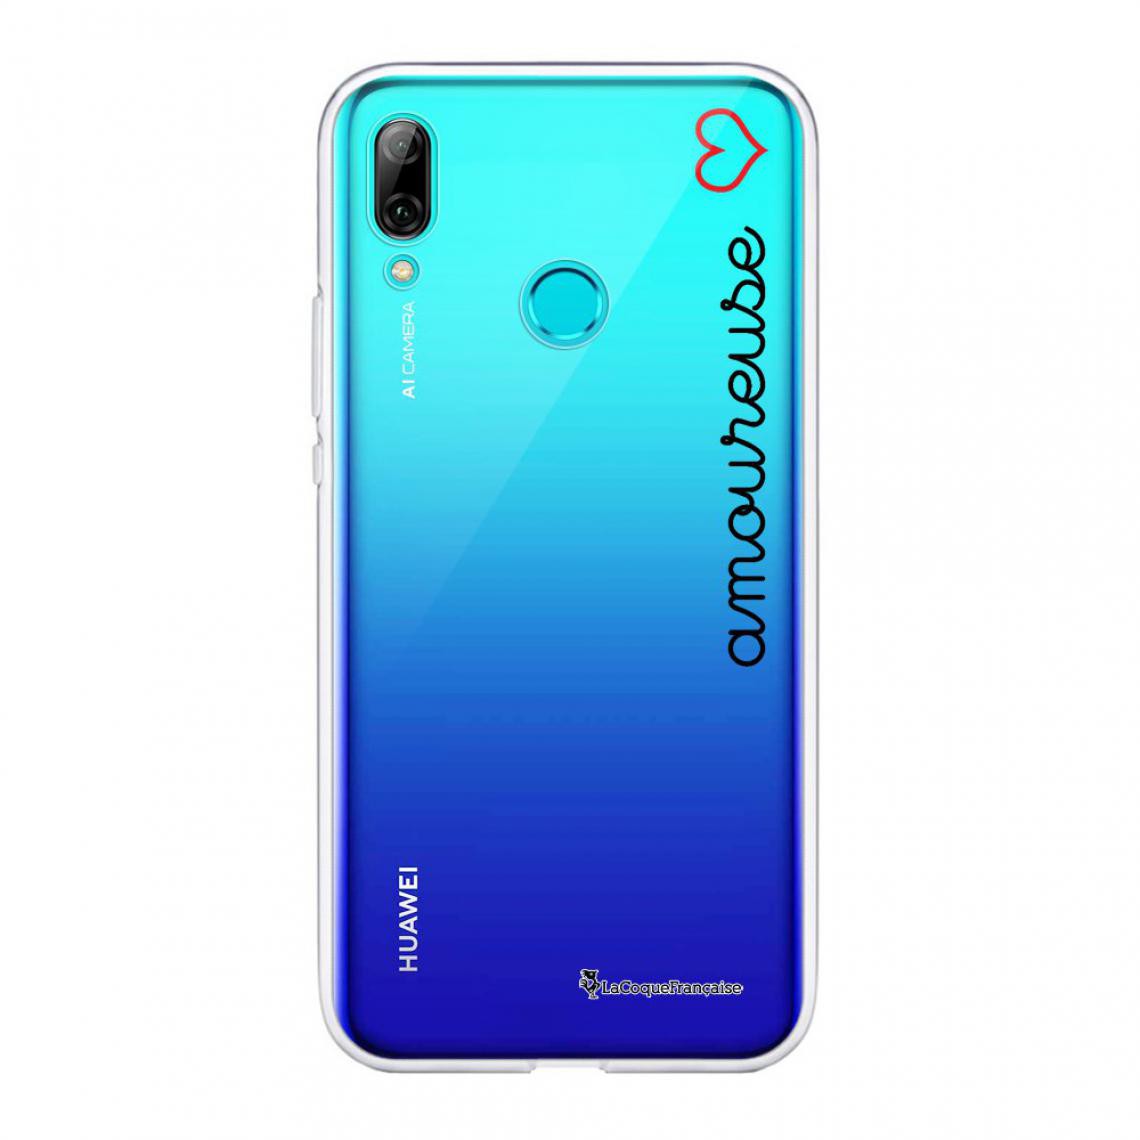 La Coque Francaise - Coque Huawei P Smart 2019 souple silicone transparente - Coque, étui smartphone